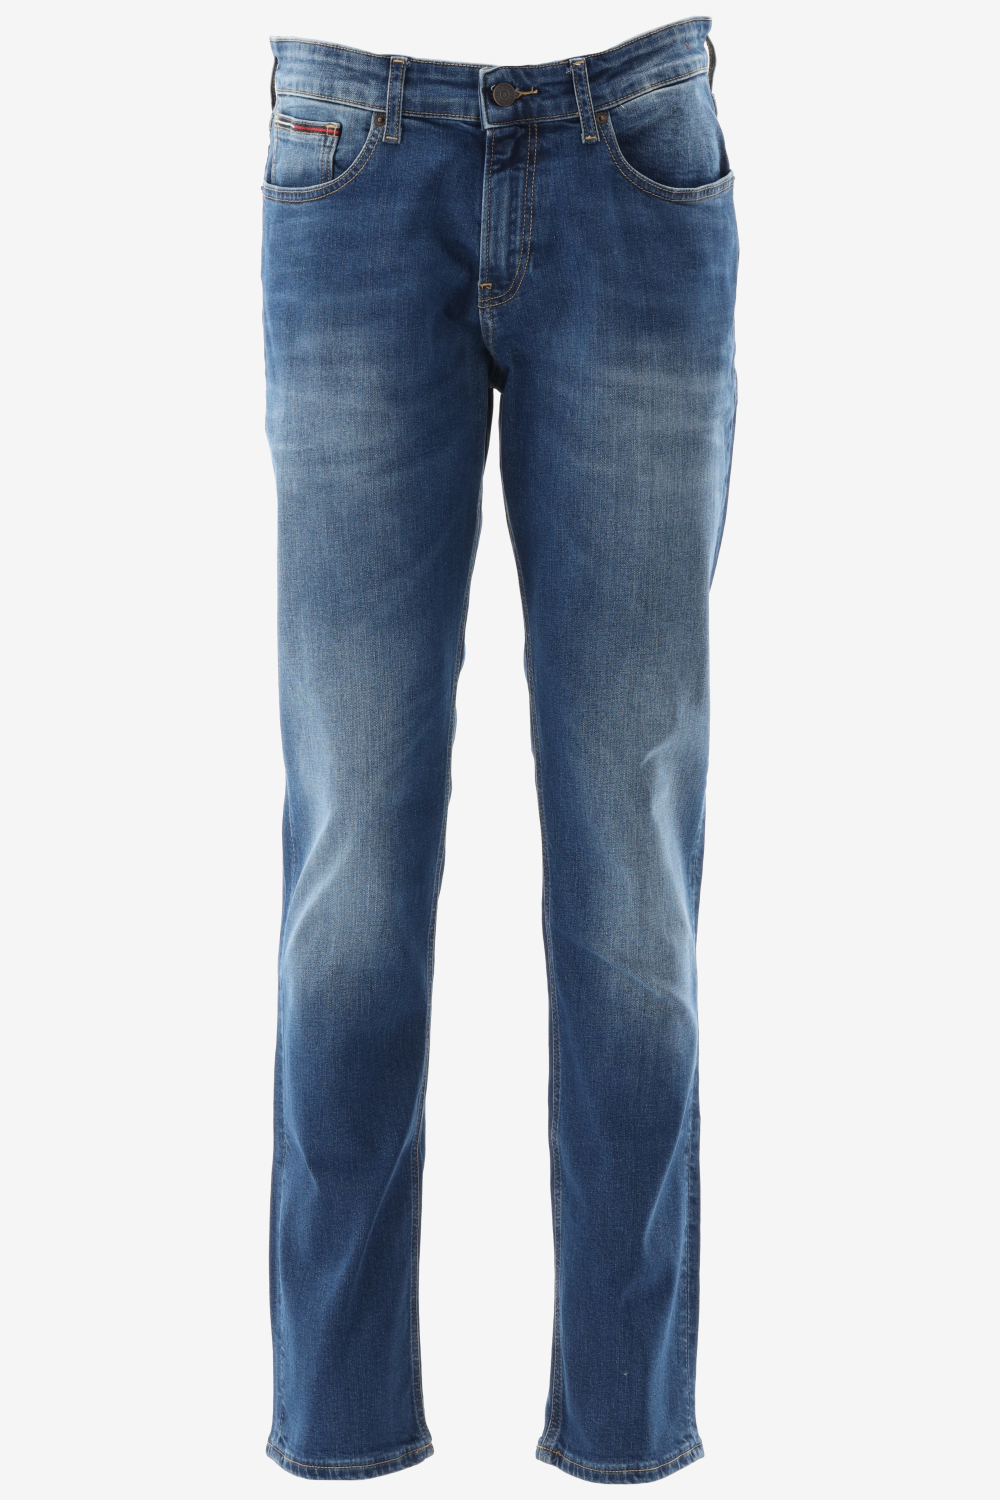 Tommy hilfiger straight fit ryan straight fit jeans maat 33-L36